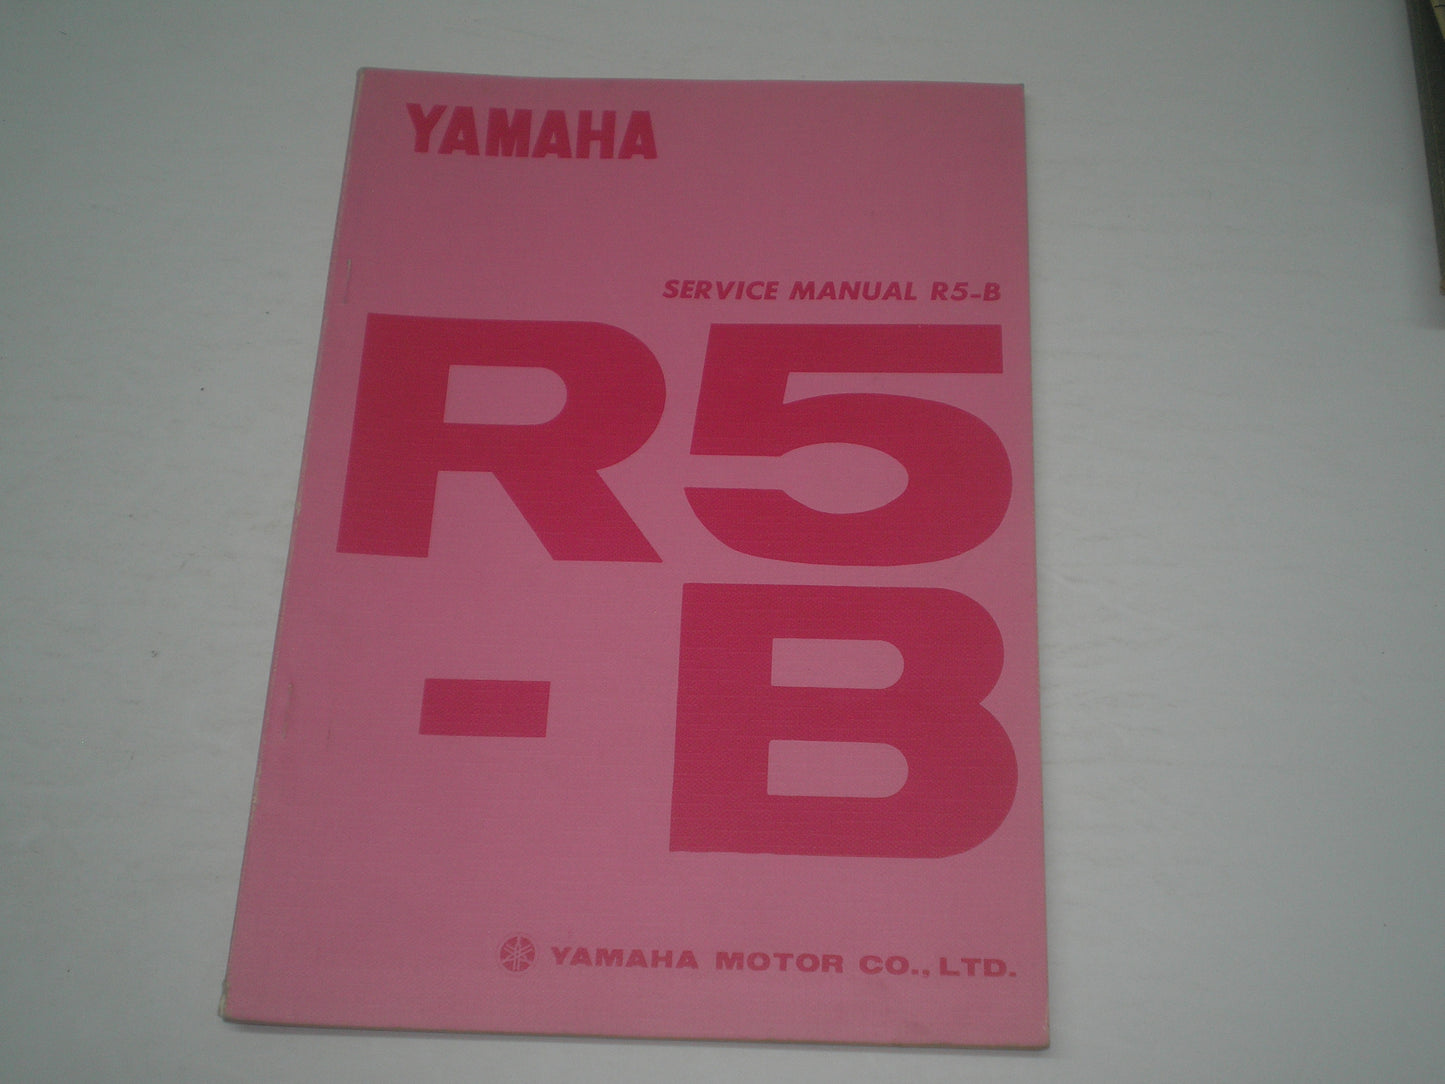 YAMAHA R5 B  R5-B  R5B 1971  Factory Service Manual  #1544